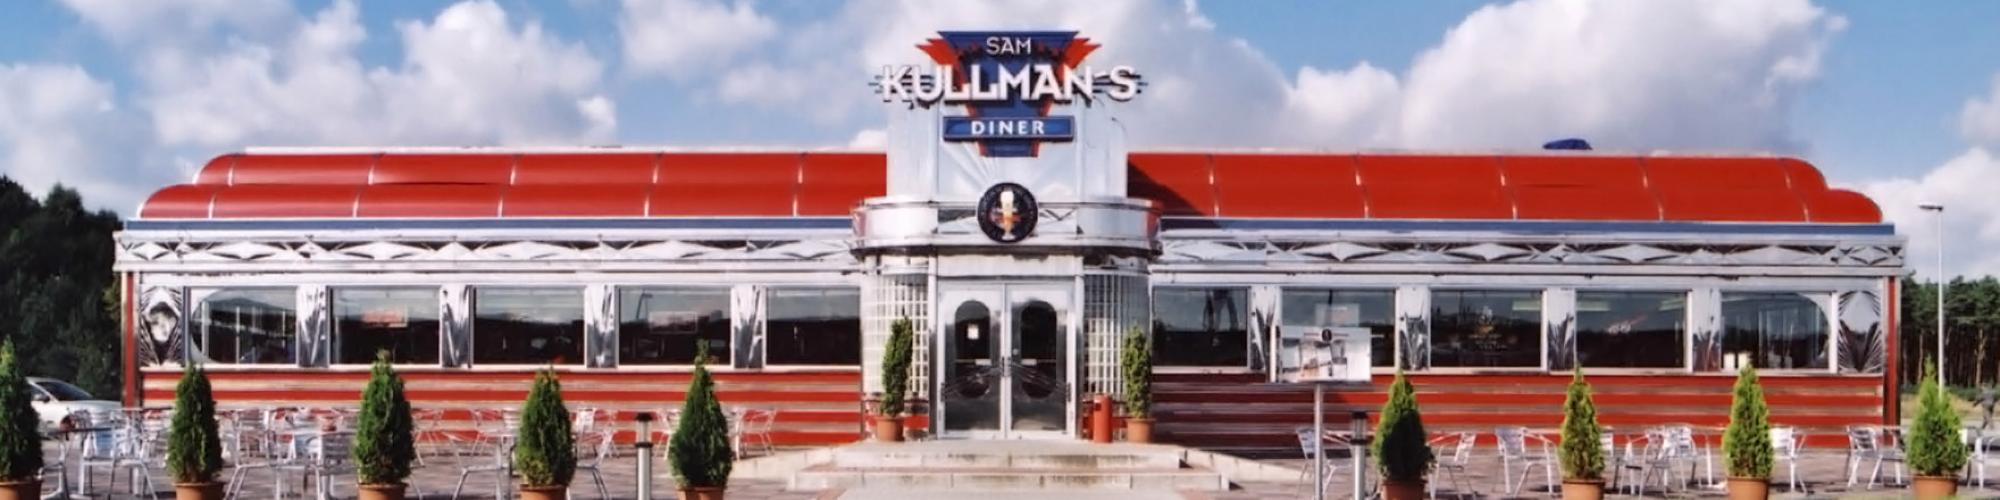 Sam Kullman’s Diner (Lexington Entertainment GmbH)